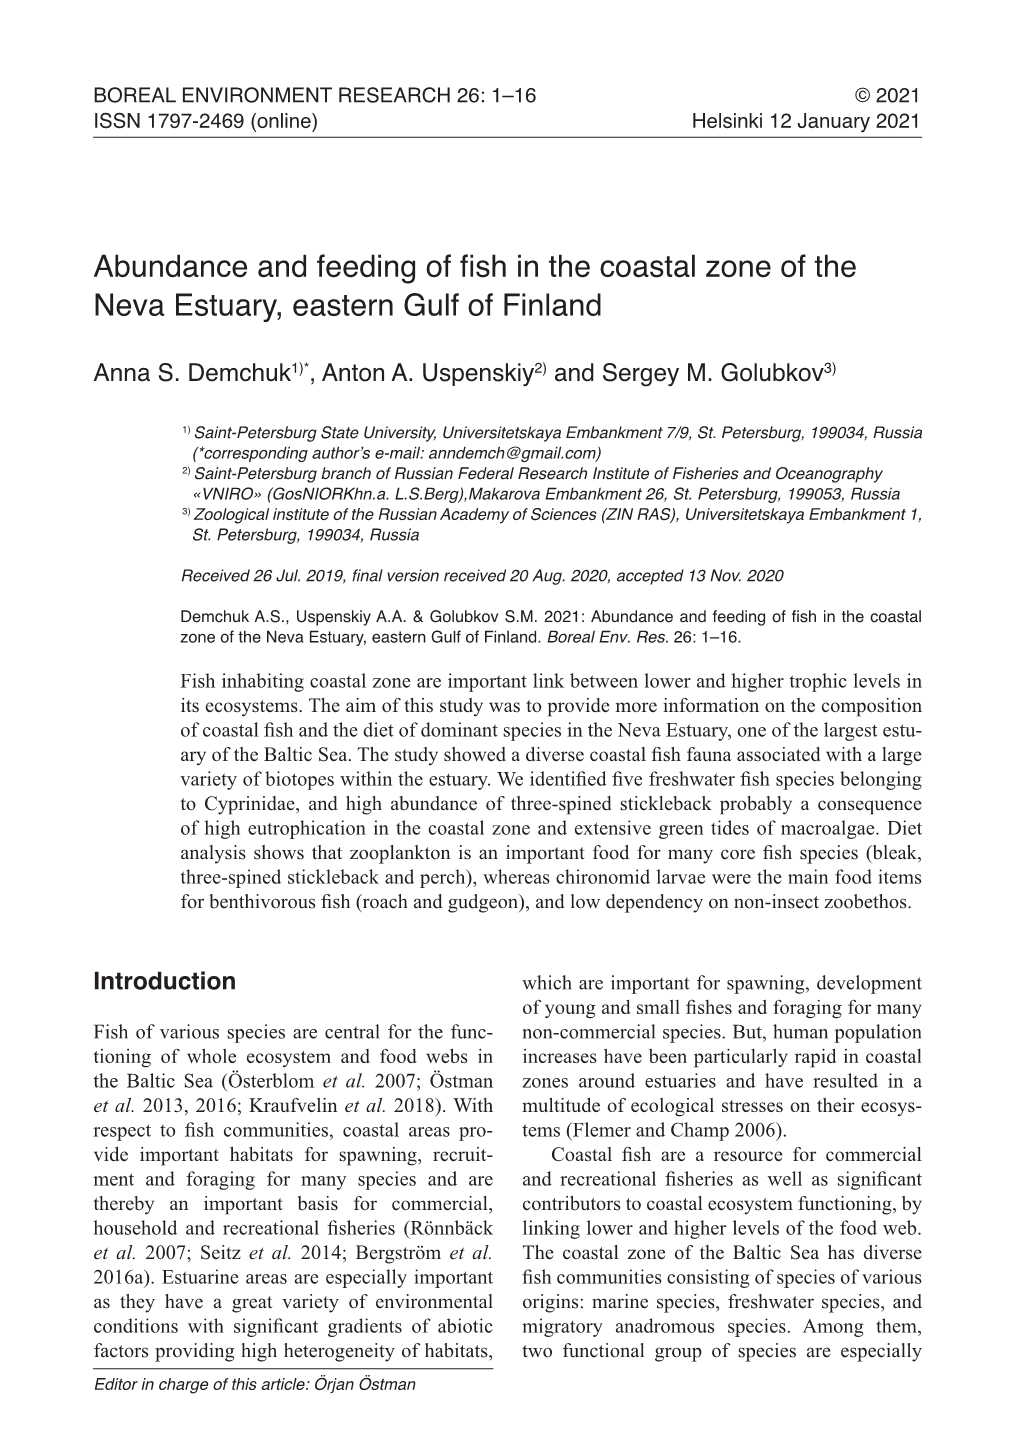 Abundance and Feeding of Fish in the Coastal Zone of the Neva Estuary, Eastern Gulf of Finland